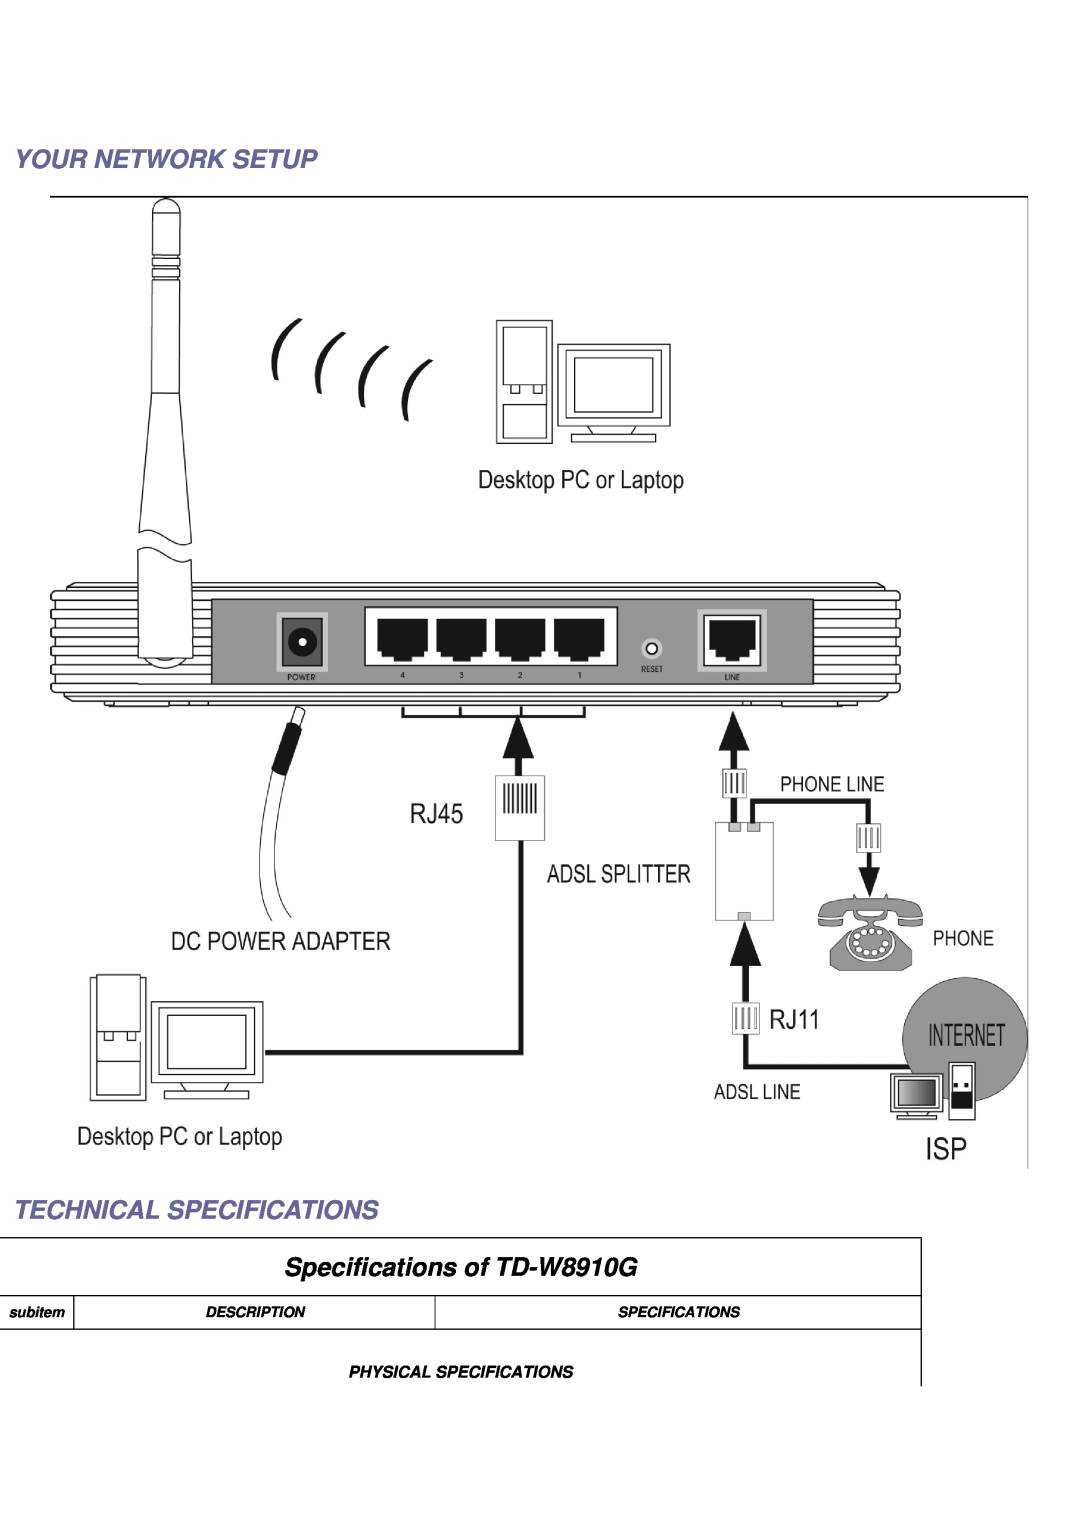 TP-Link Your Network Setup Technical Specifications, Physical Specifications, Specifications of TD-W8910G, subitem 